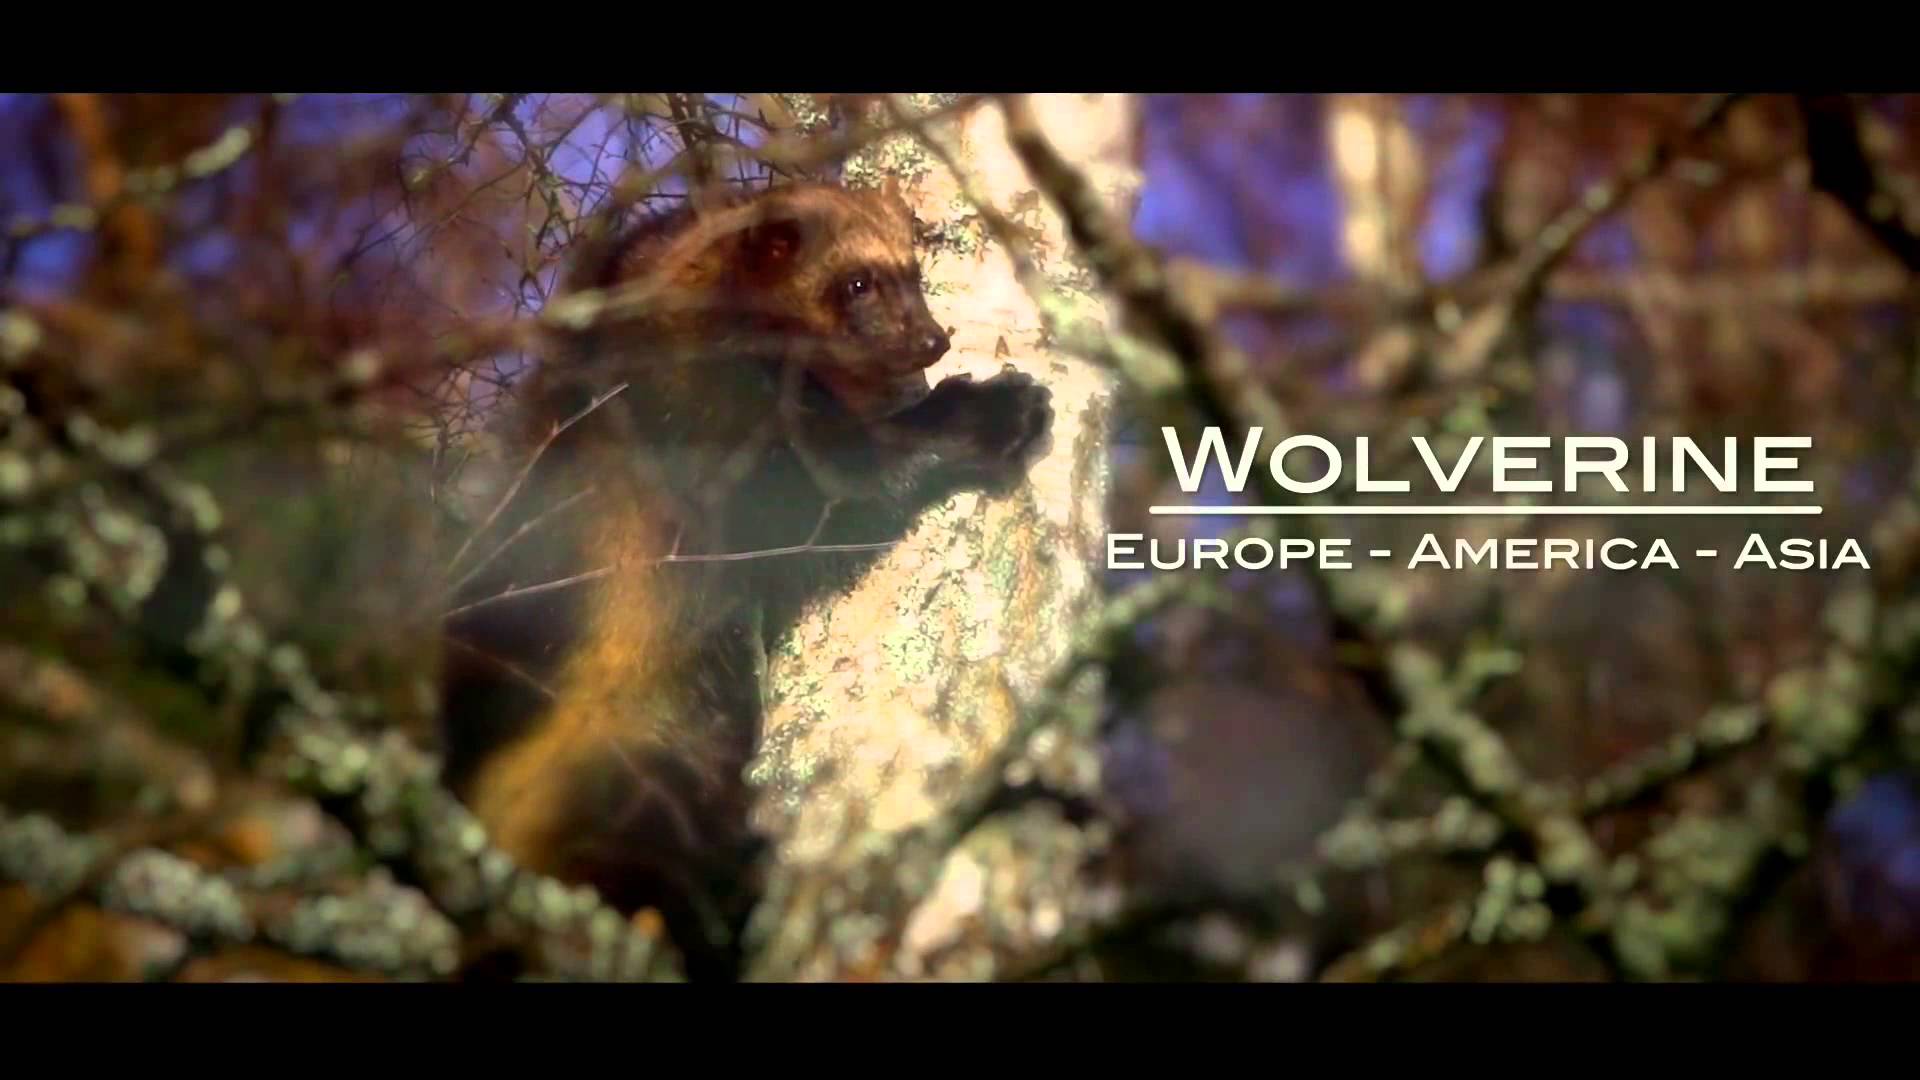 Highland wildlife park webcam